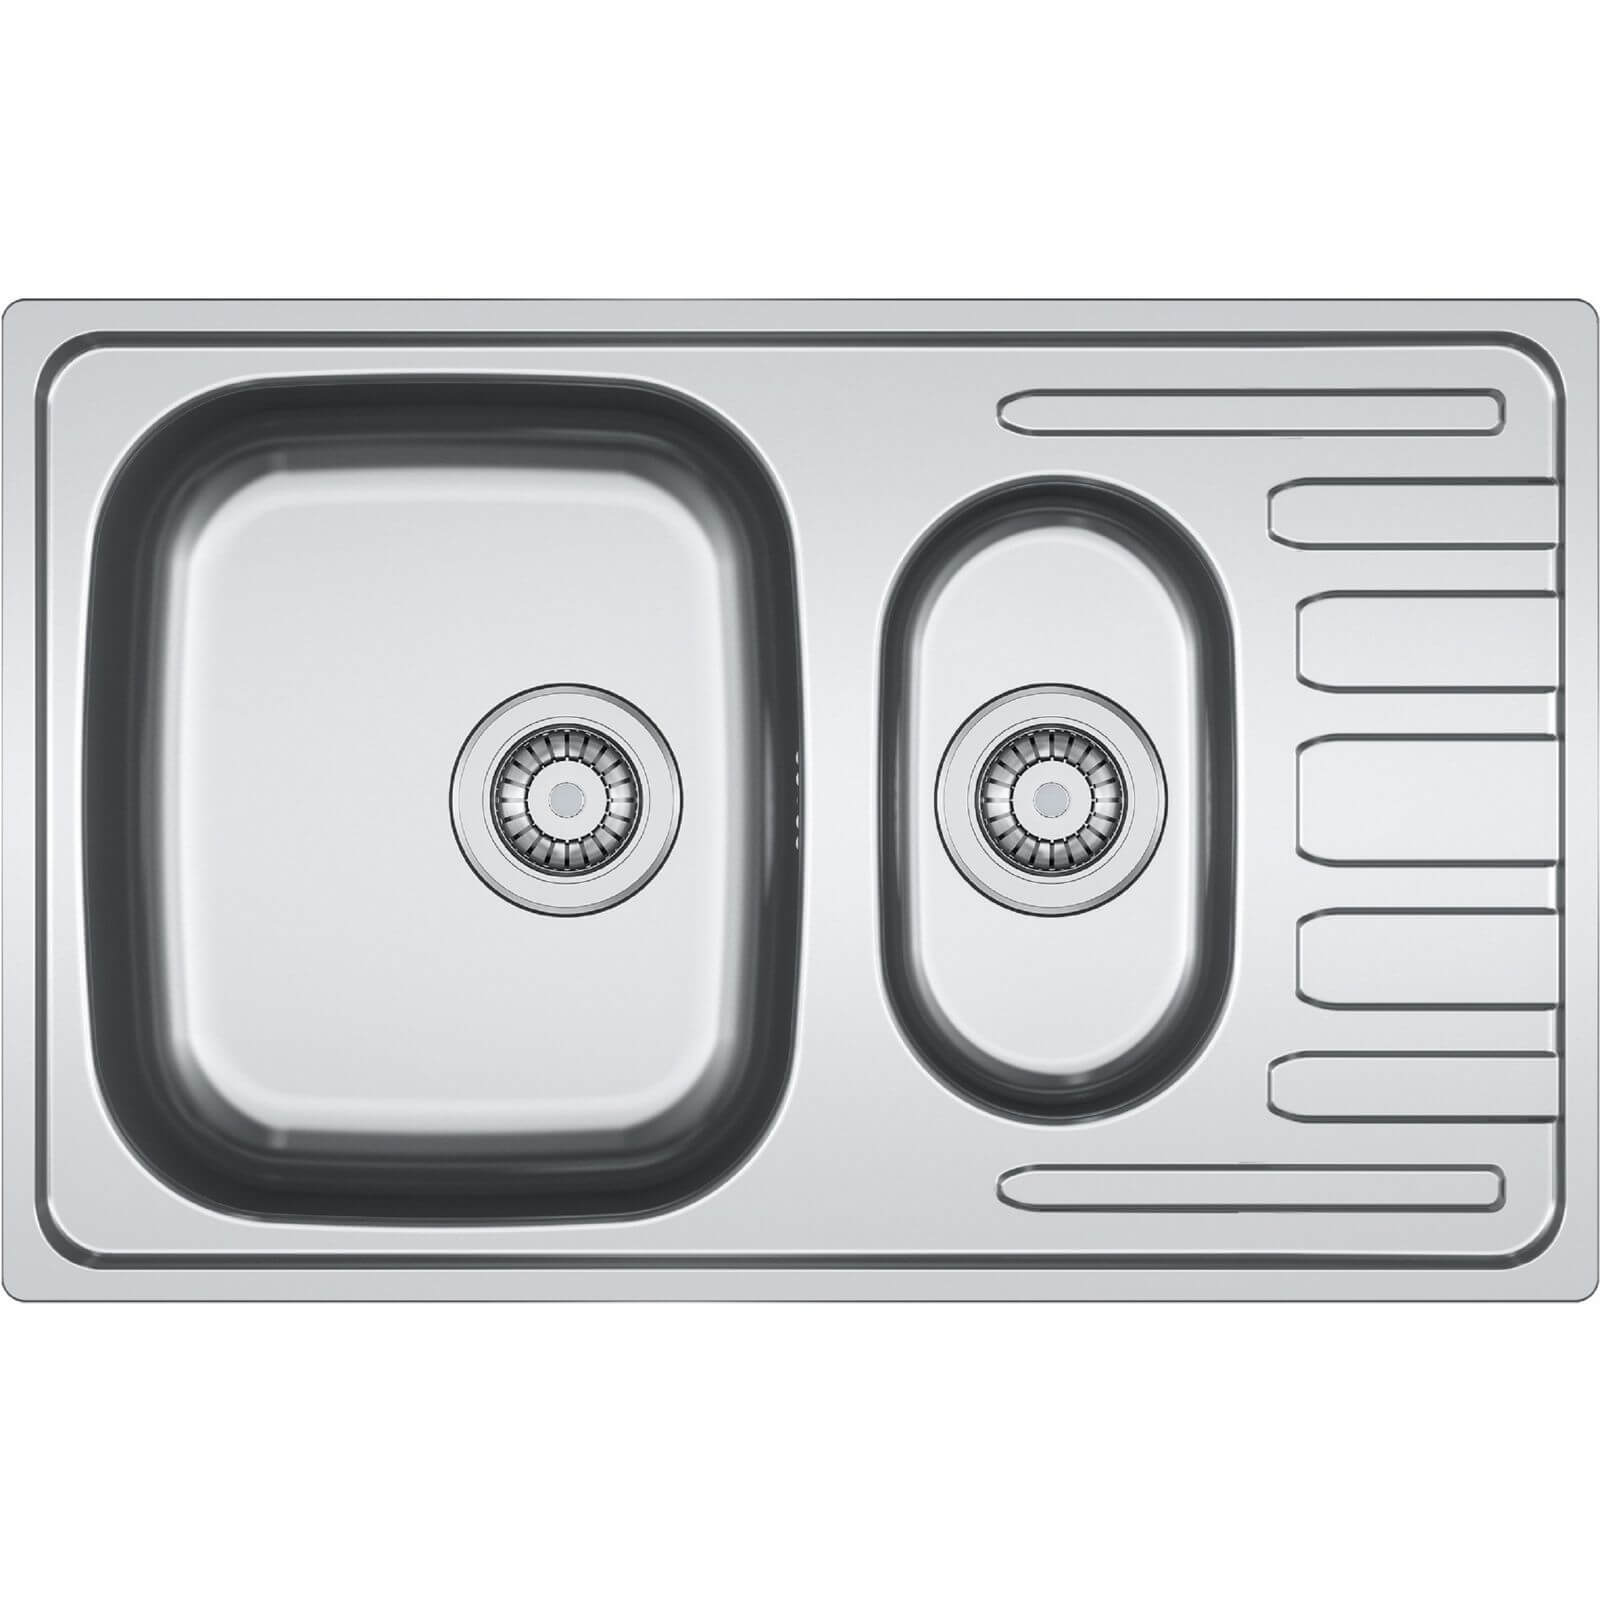 Estillo Compact Kitchen Sink - 1.5 Bowl